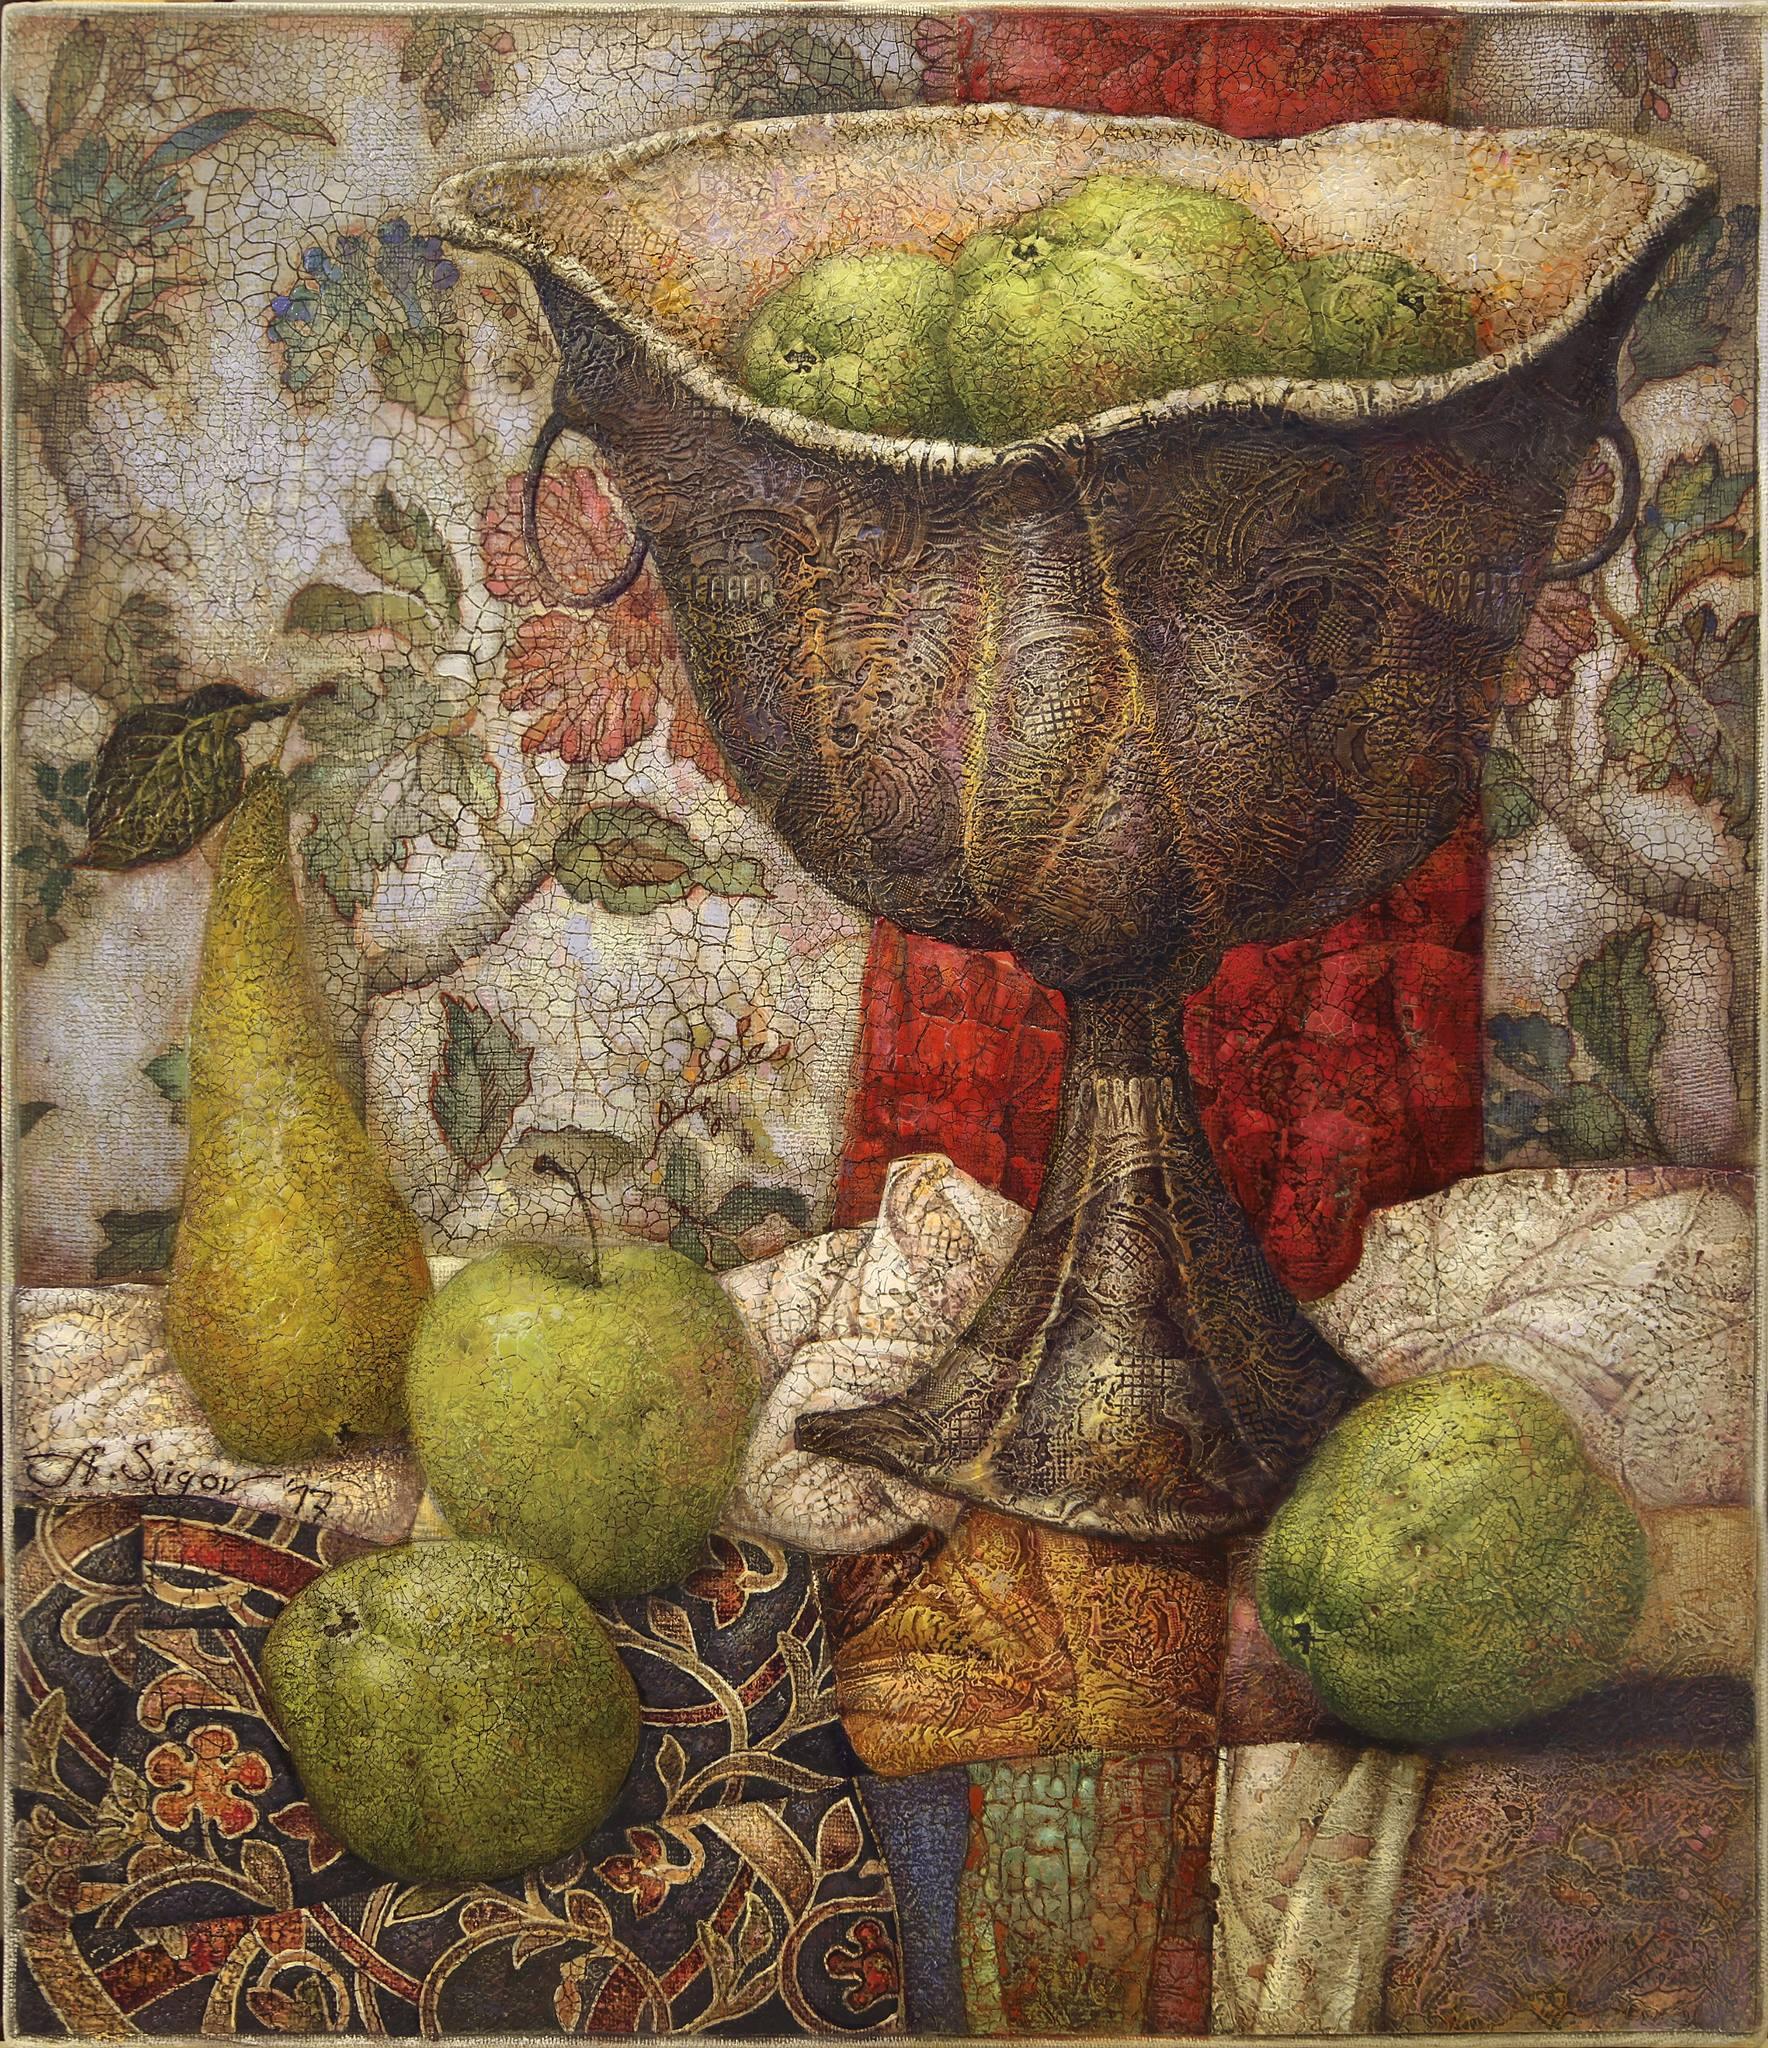 Apples of the old garden. Original modern art painting